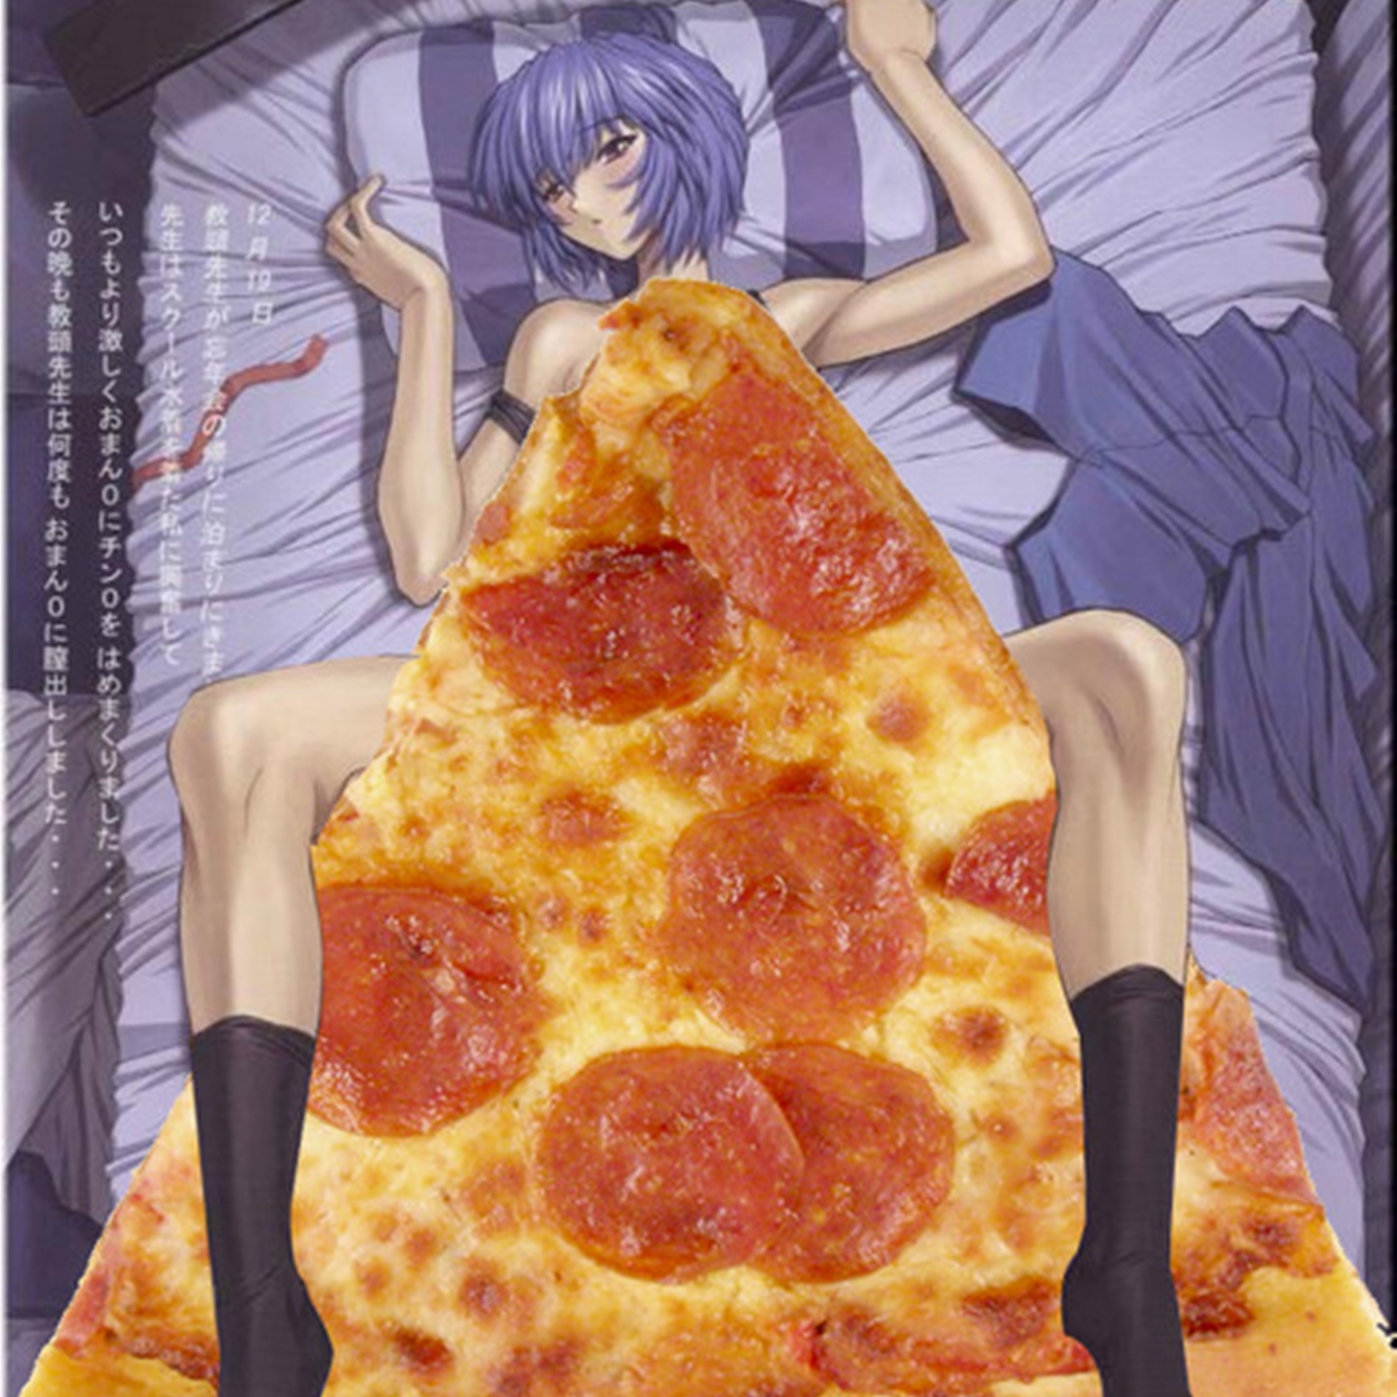 Desiree cousteau pizza pornhub